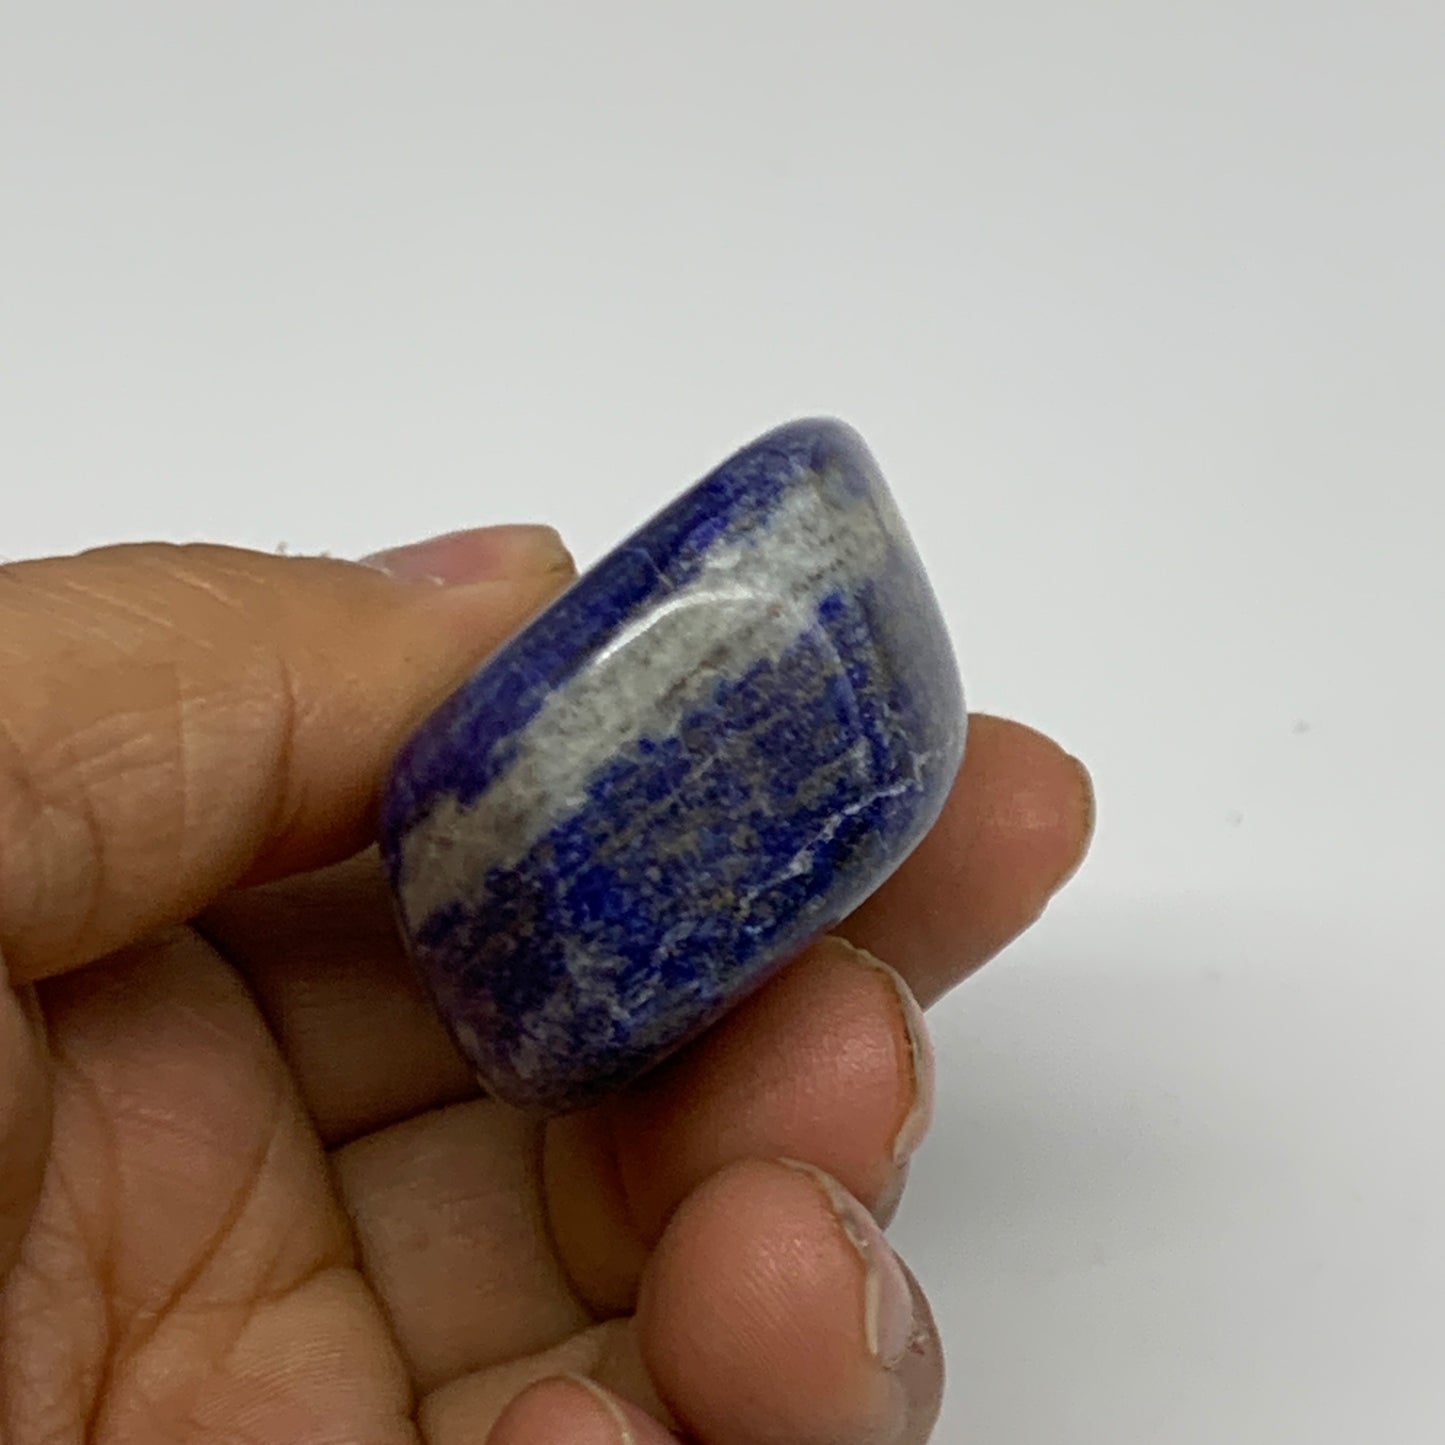 88.4g, 2.4"x1.4"x0.8",  Natural Freeform Lapis Lazuli from Afghanistan, B33105